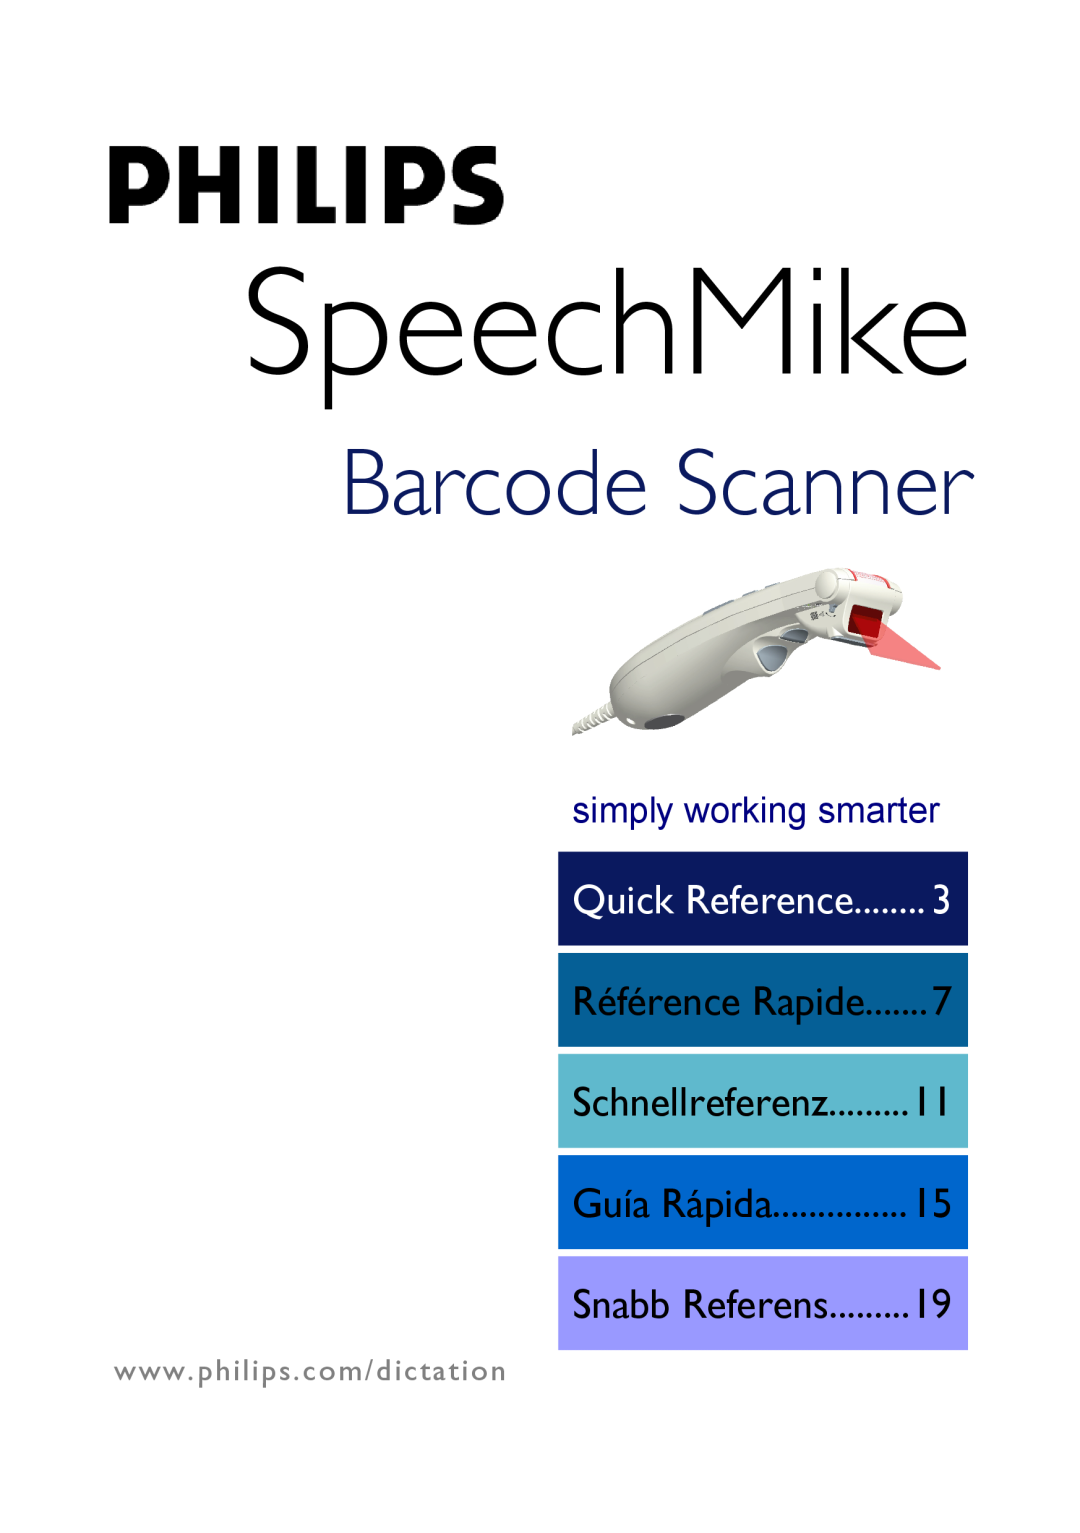 Philips LFH 5282 manual SpeechMike, Barcode Scanner, simply working smarter, Quick Reference, Schnellreferenz, Guía Rápida 